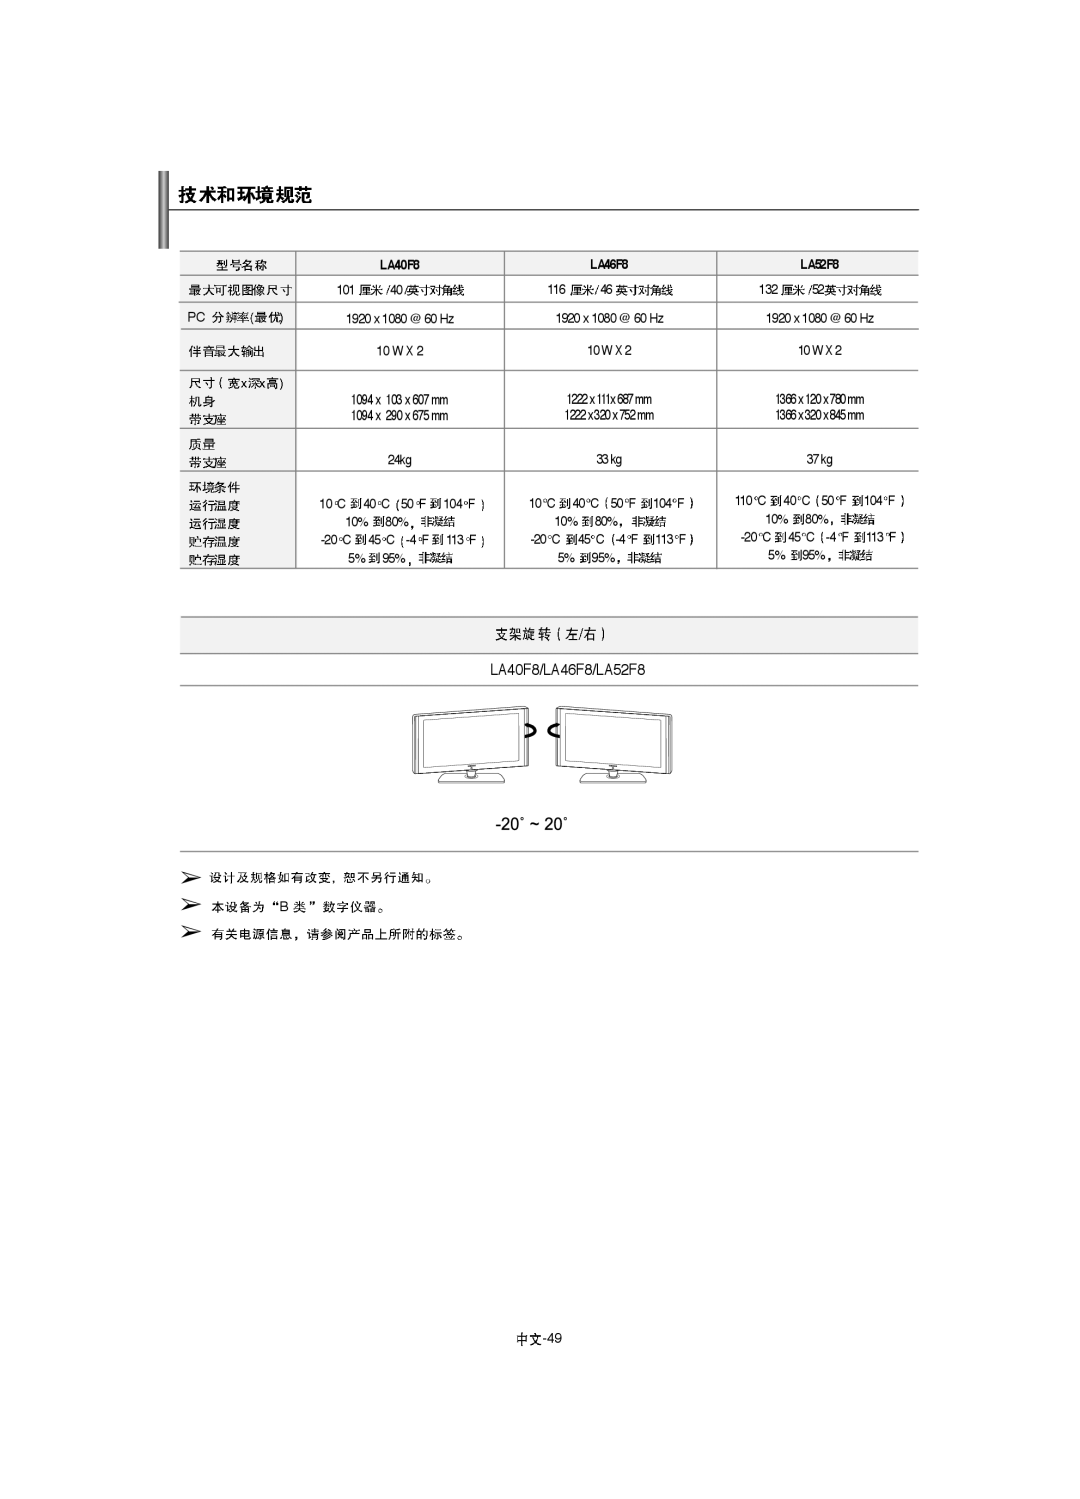 Samsung manual LA40F8/LA46F8/LA52F8 